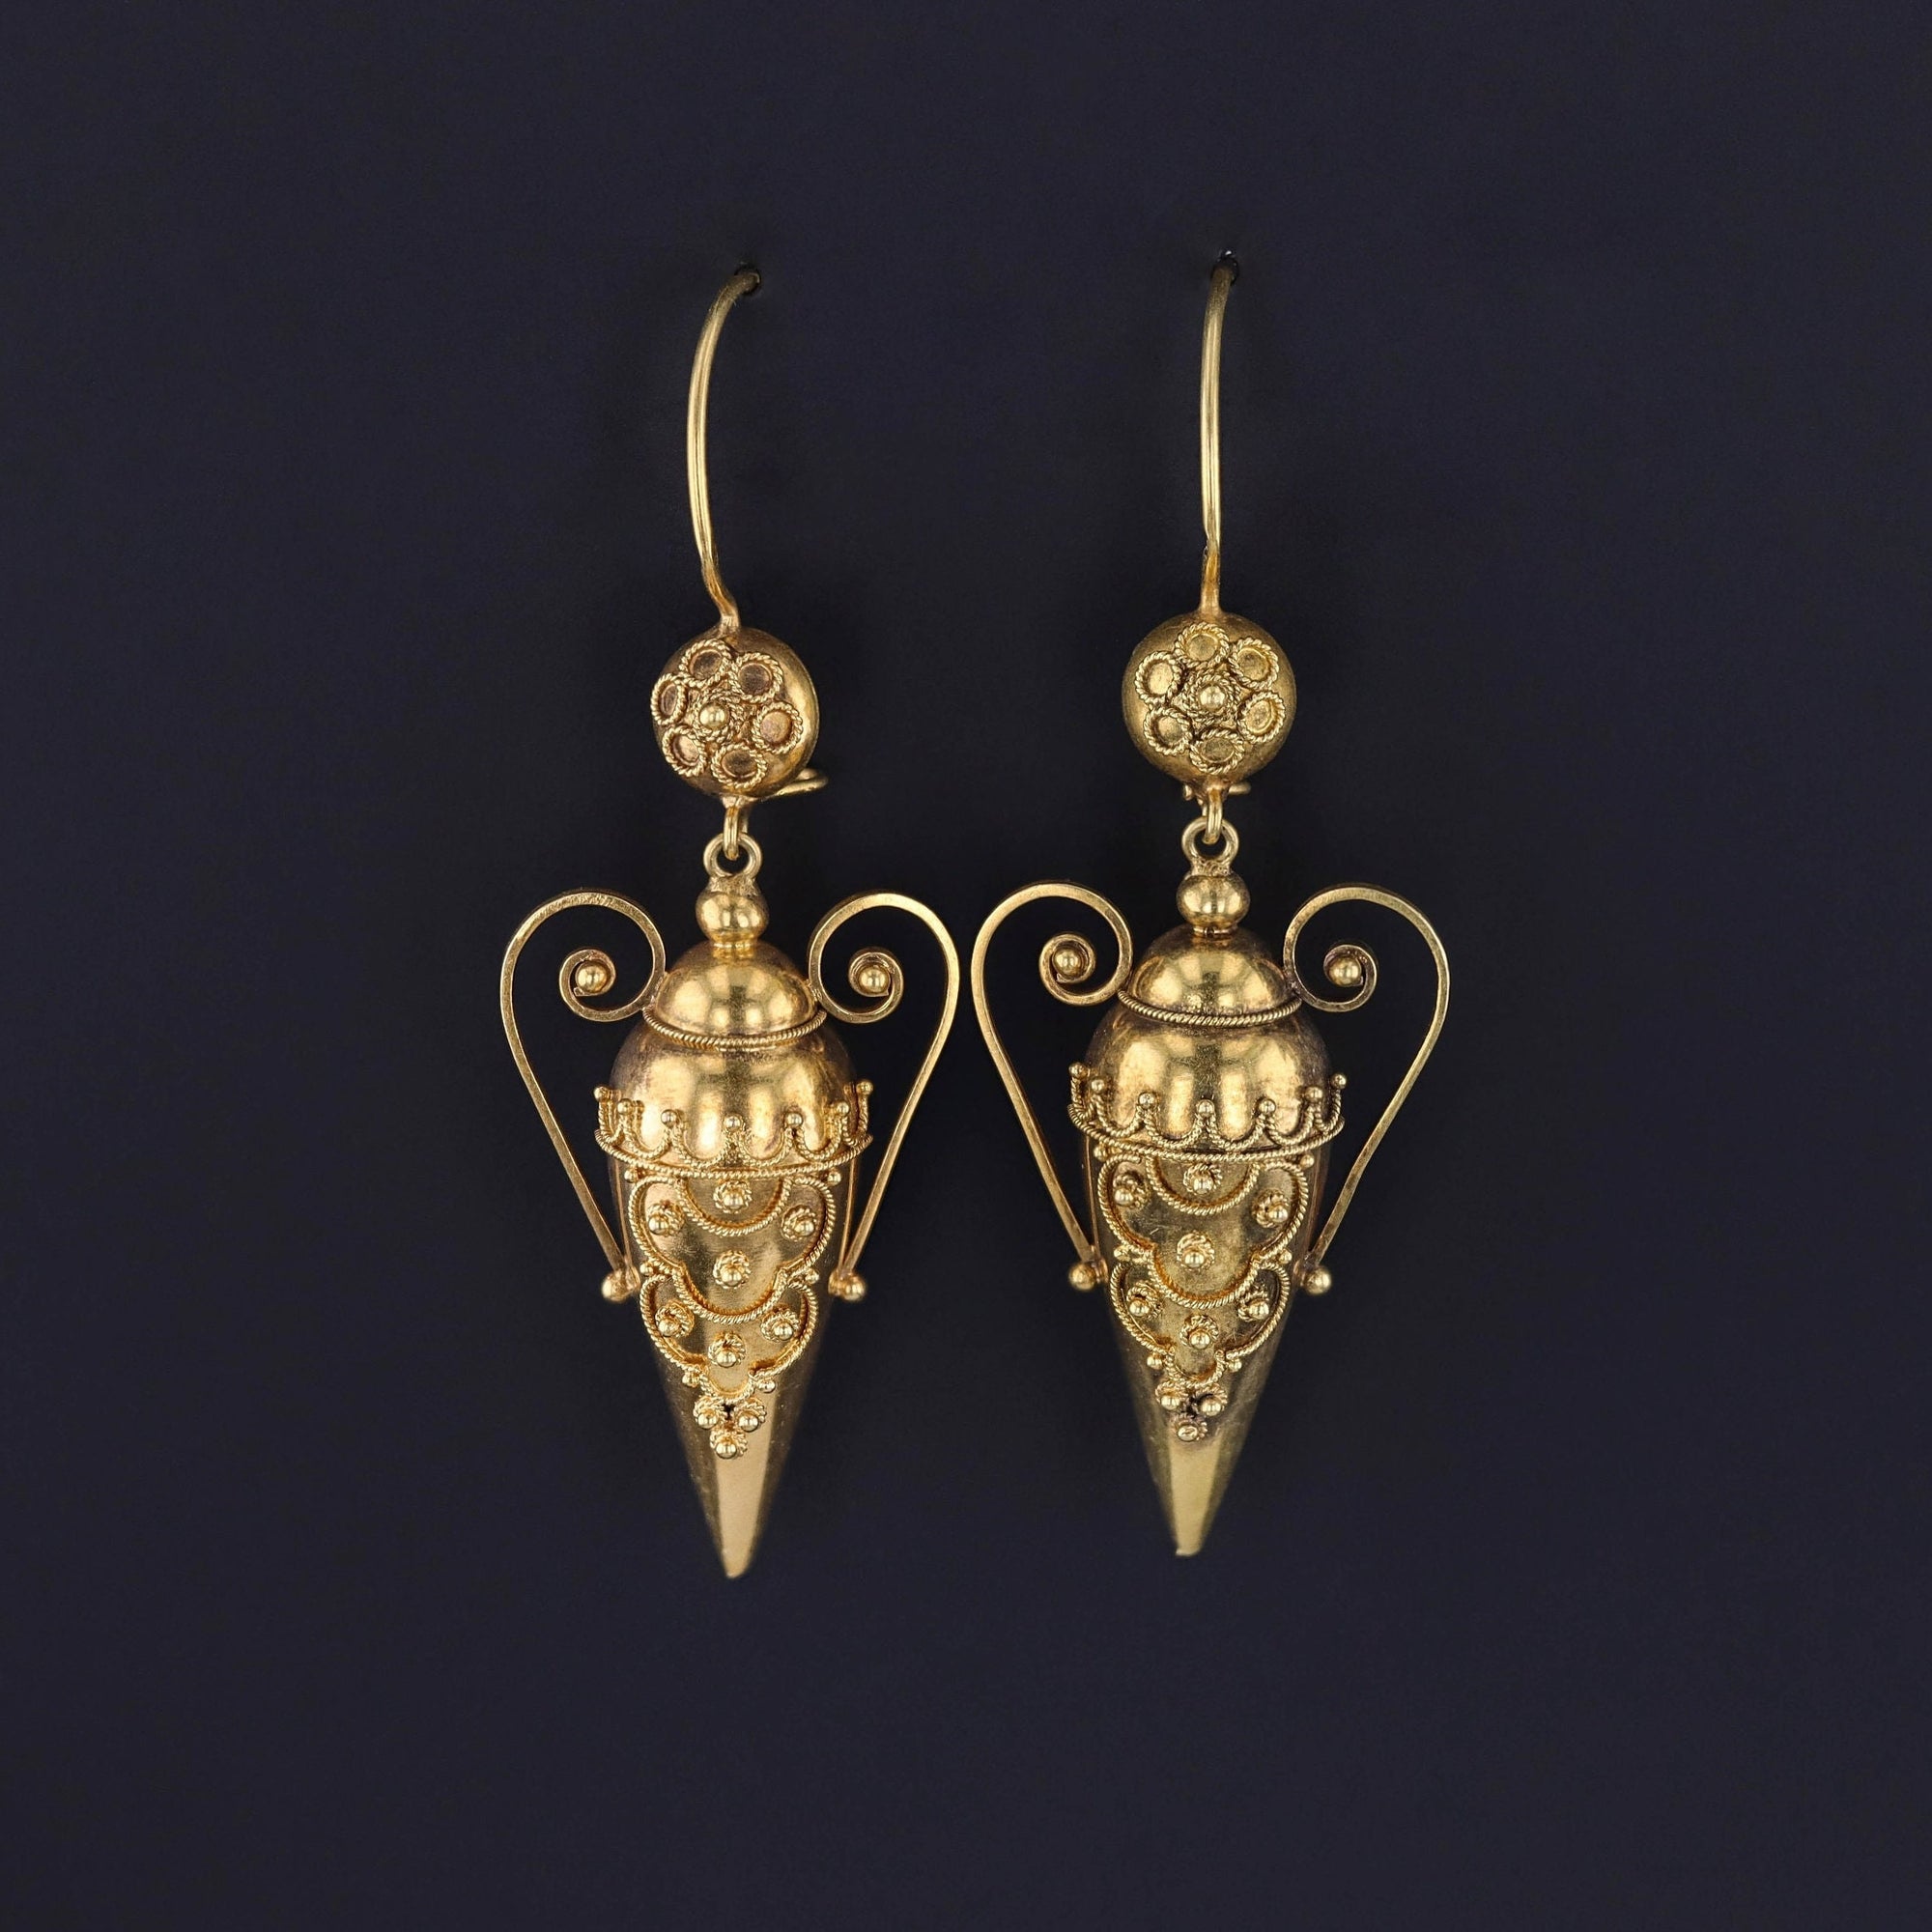 Antique Etruscan Revival Amphora Earrings of 18k Gold